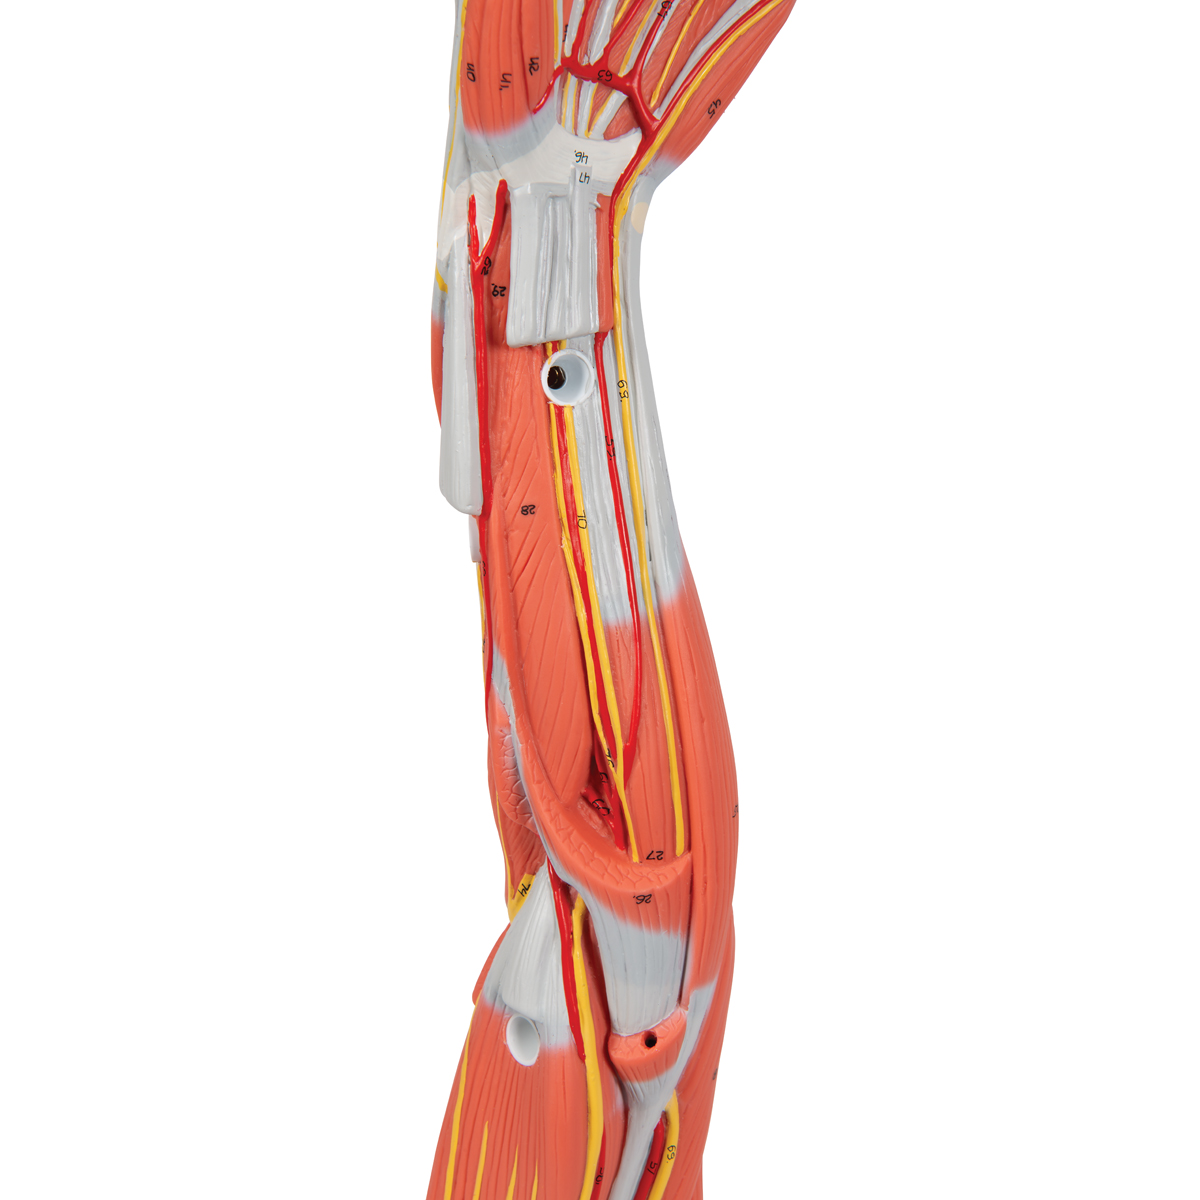 Teach anatomy. Анатомическая модель мышц руки. Макет мышцы руки. Анатомический макет мышц руки. Муляж мышцы руки.